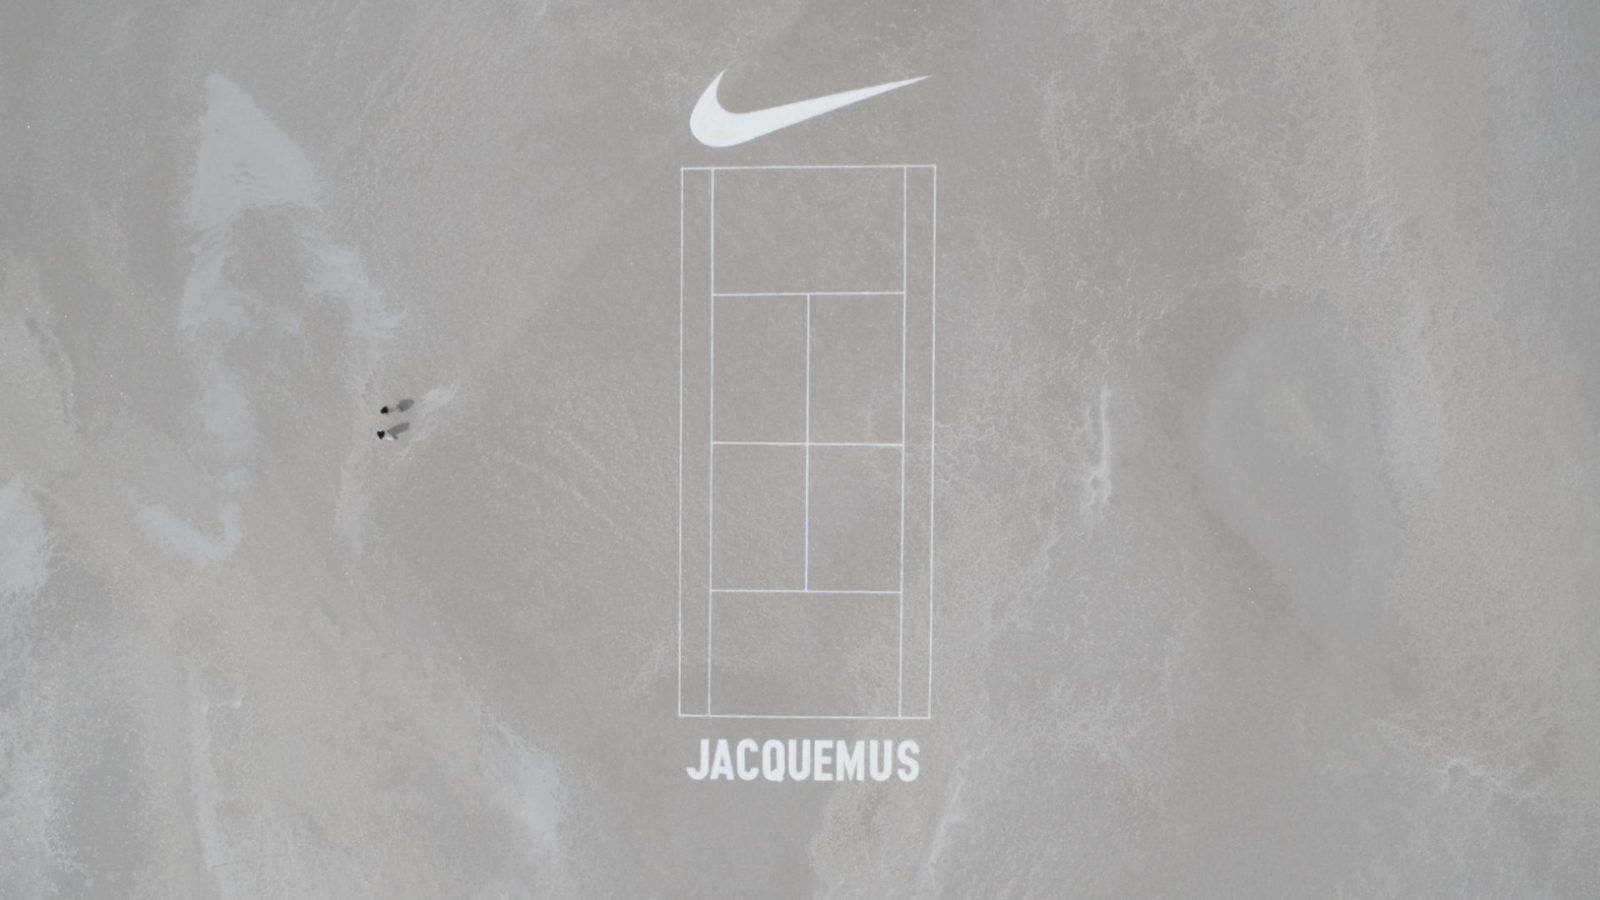 Jacquemus x Nike is Here to Make Sportswear Sensual Again